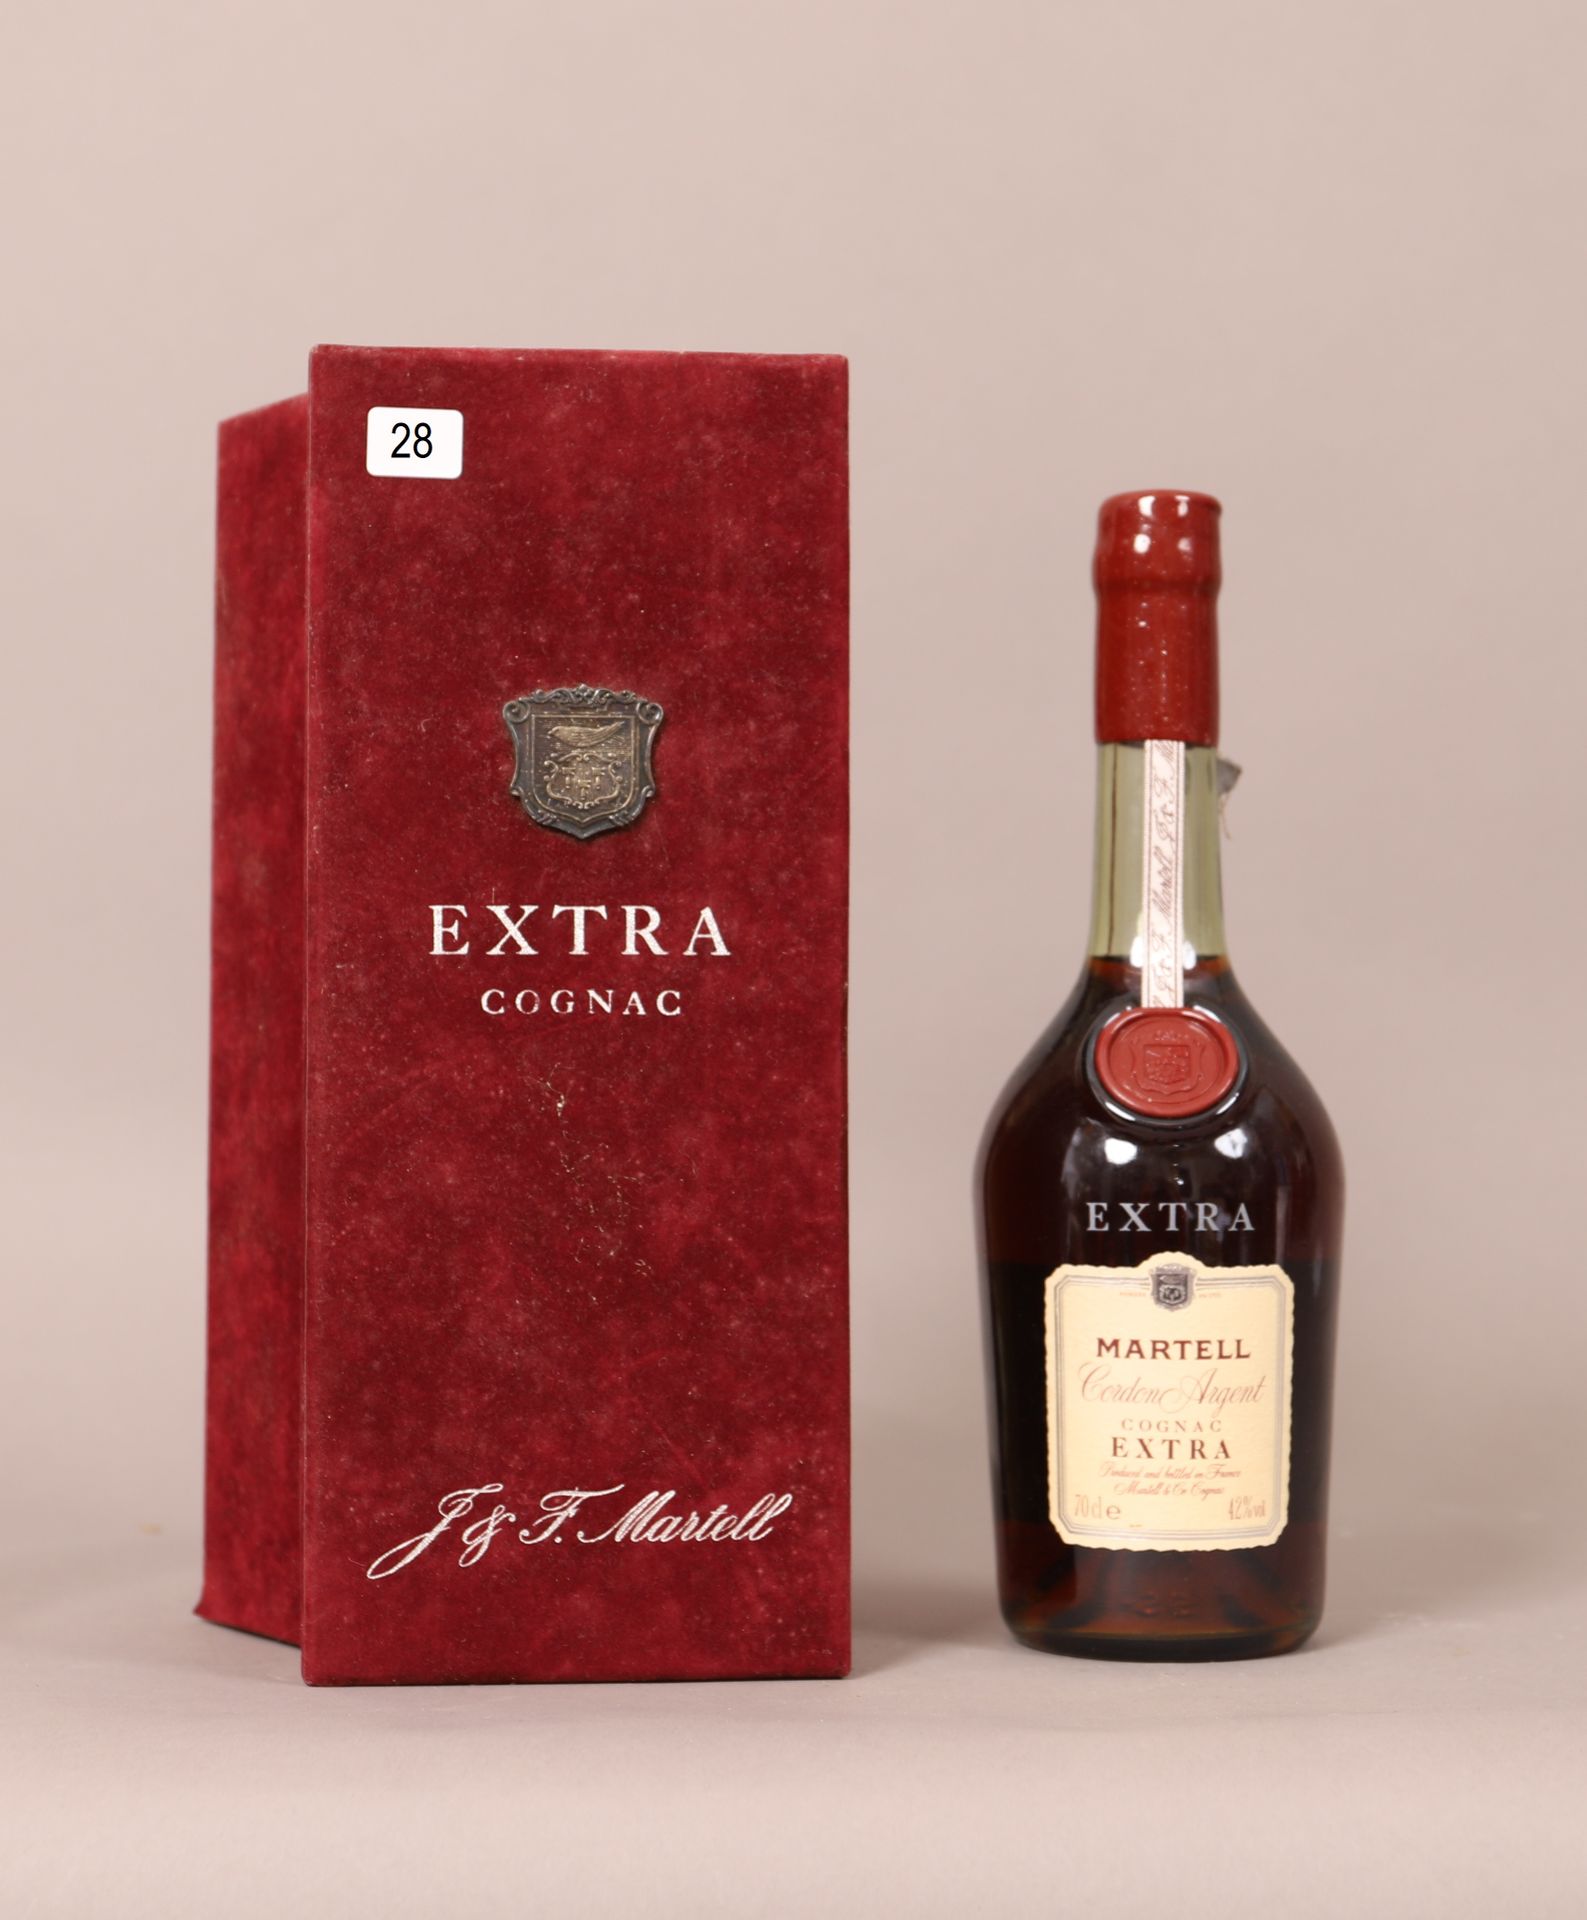 Null Cognac Extra (x1)

Martell

Cordon argent

0,70L